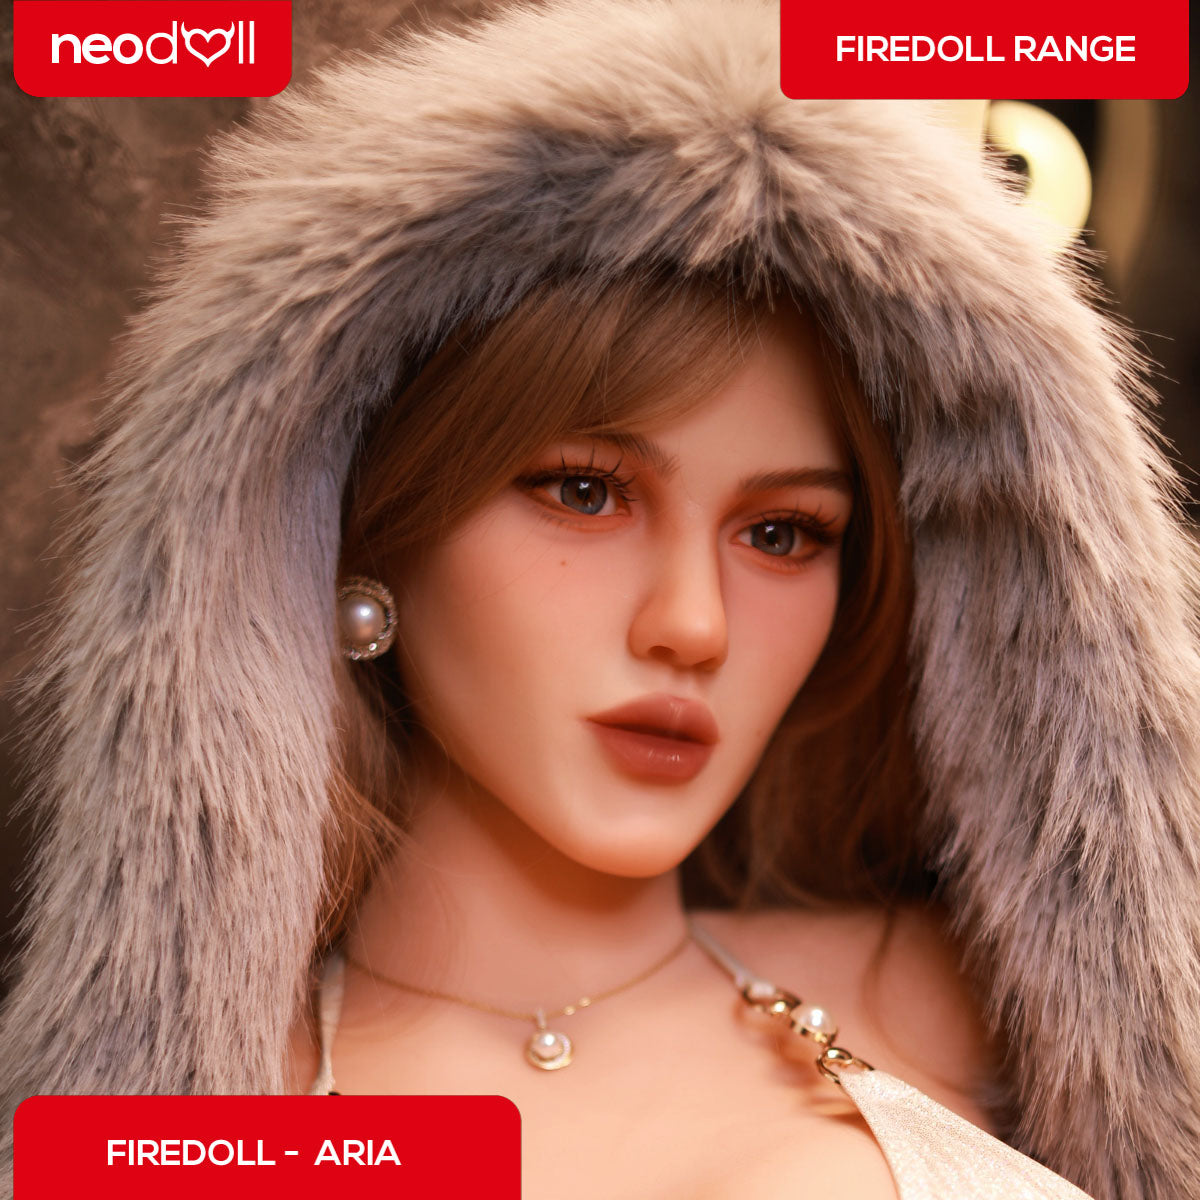 Firedoll Torso - Aria - Realistic Sex Doll Torso - Light tan